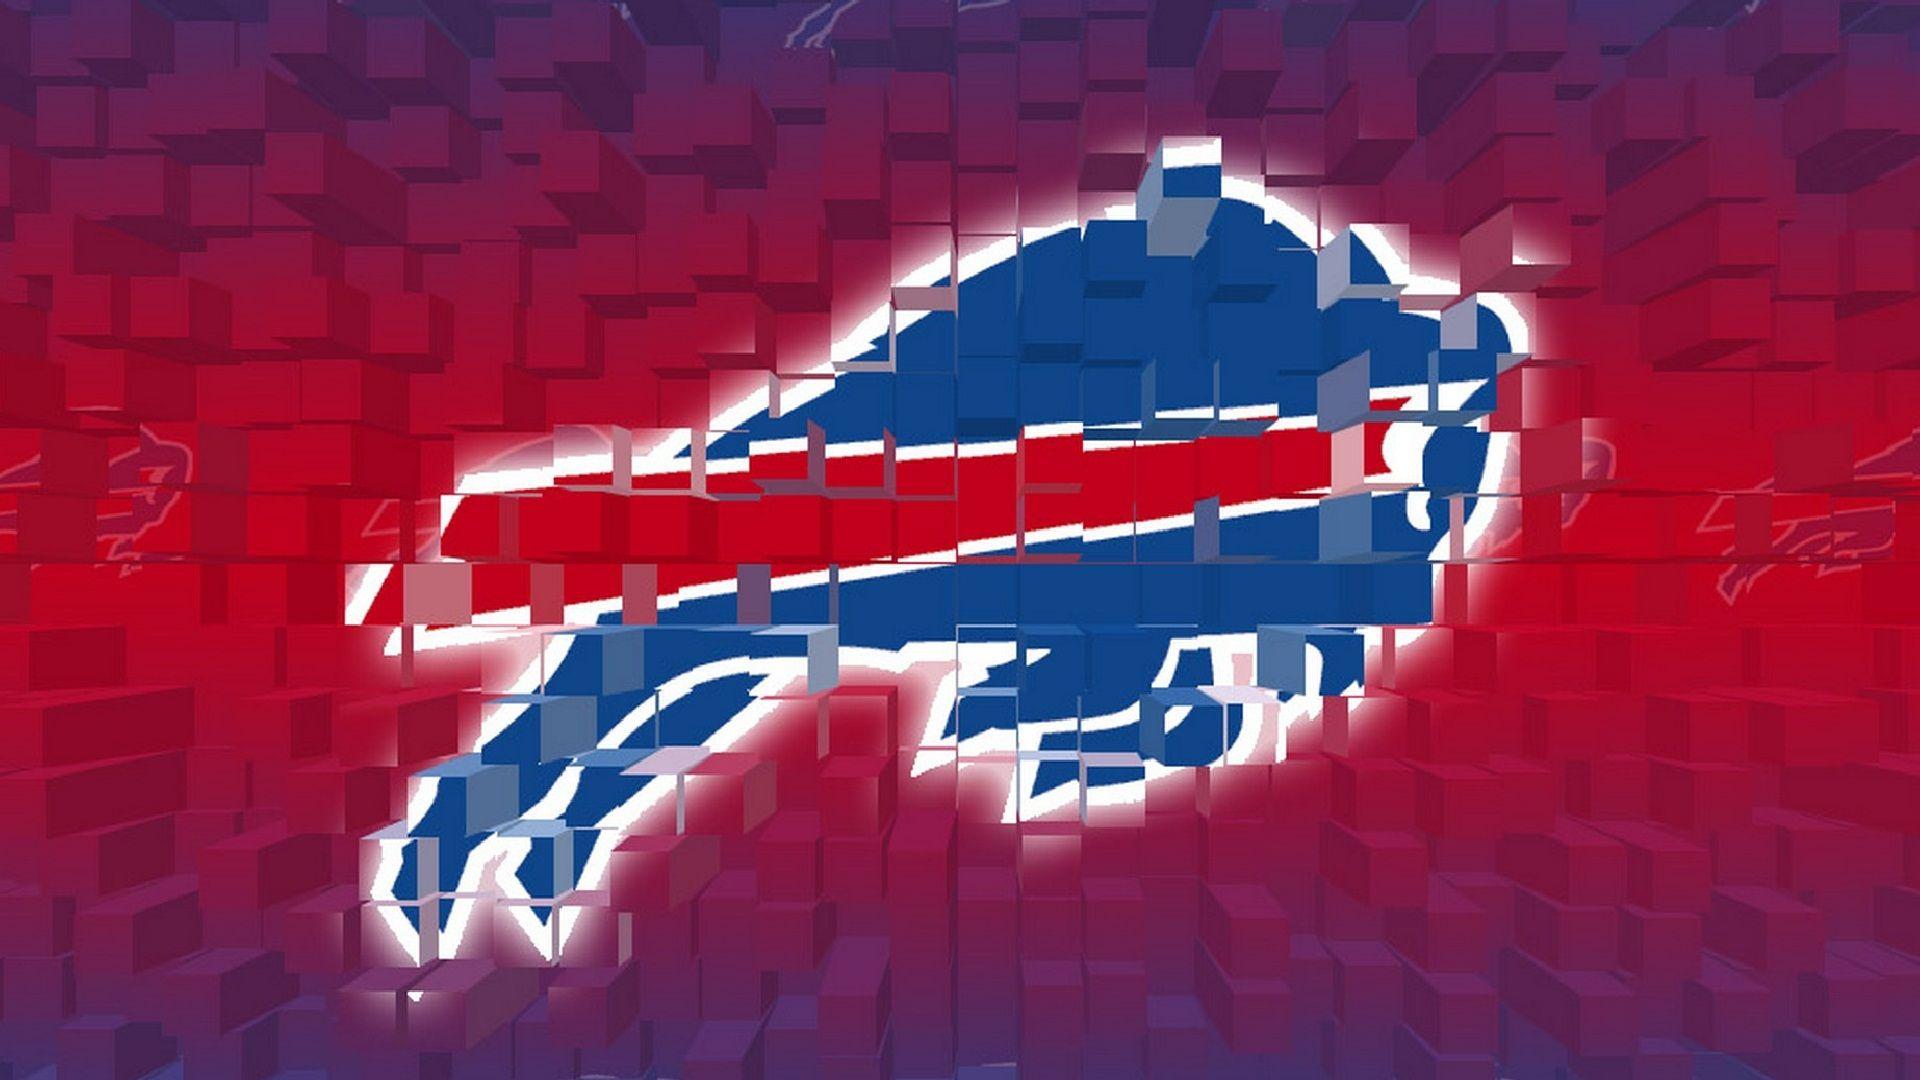 HD Buffalo Bills Background. Wallpaper. Buffalo bills, Football